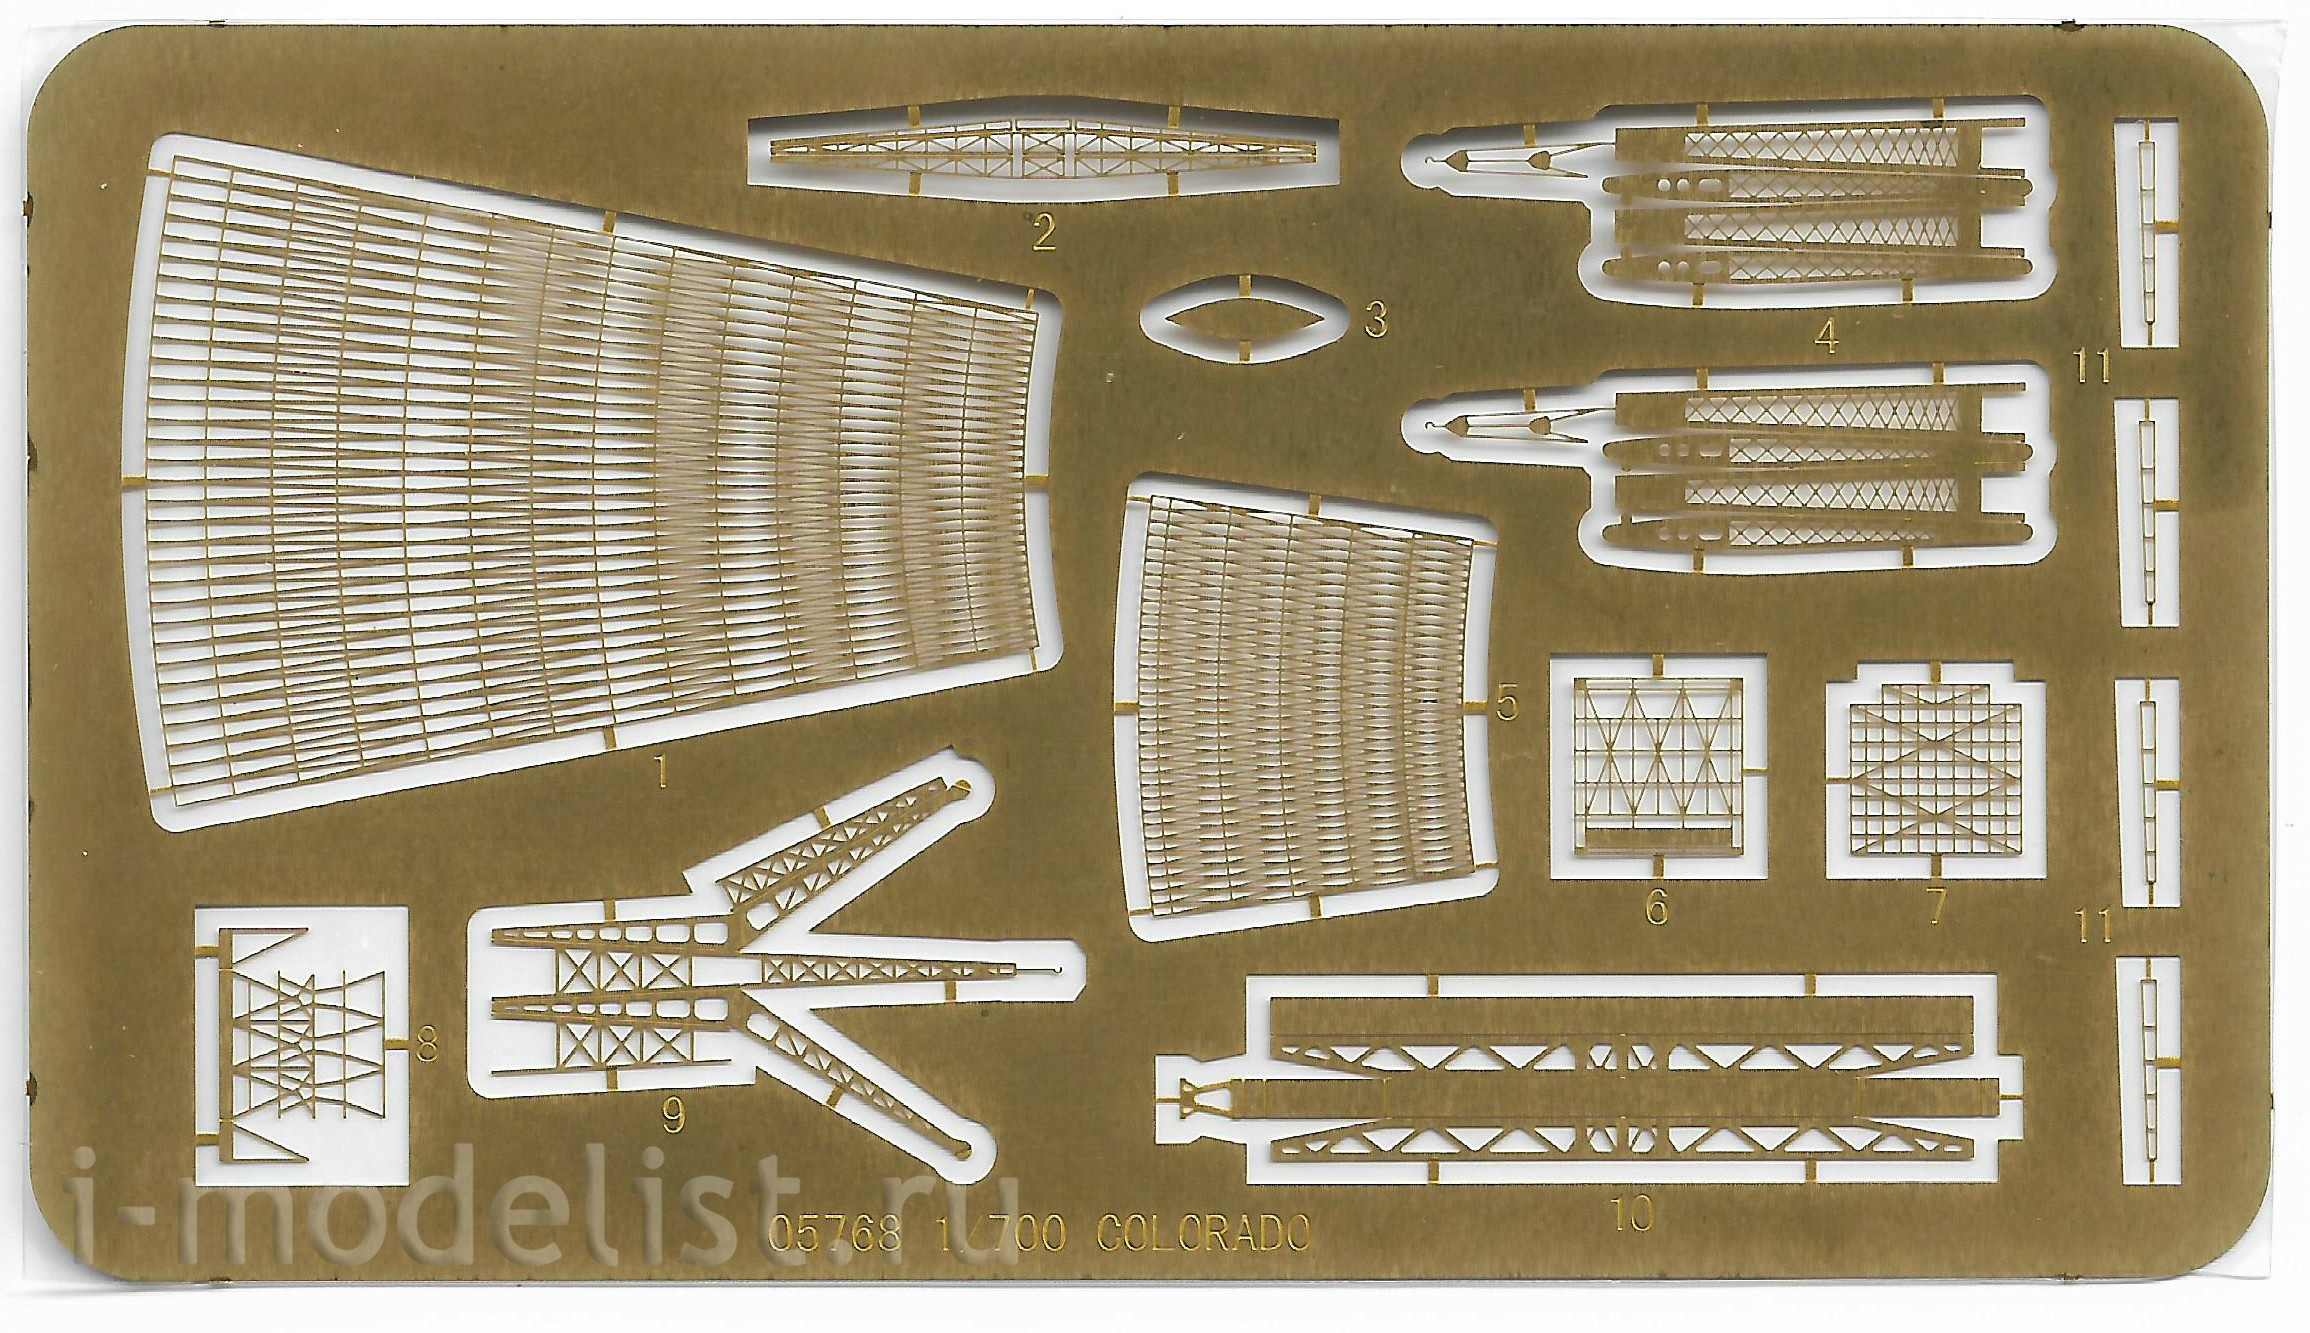 05772 I-Modeler Glue liquid Plus Gift Trumpeter 1/700 Ship USS West Virginia (1945)